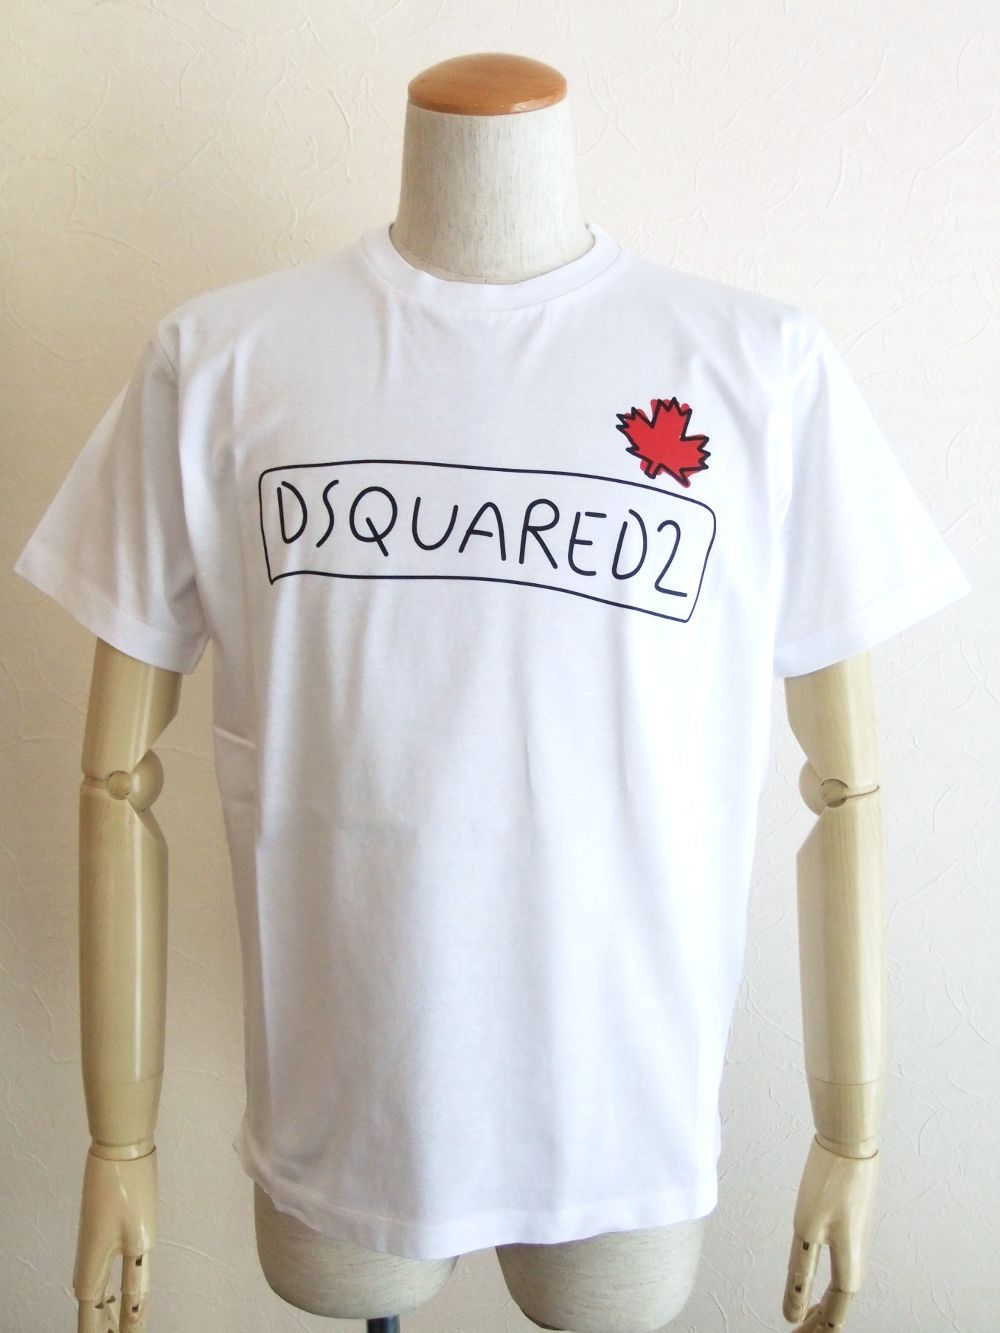 DSQUARED2 ロゴプリントシャツ